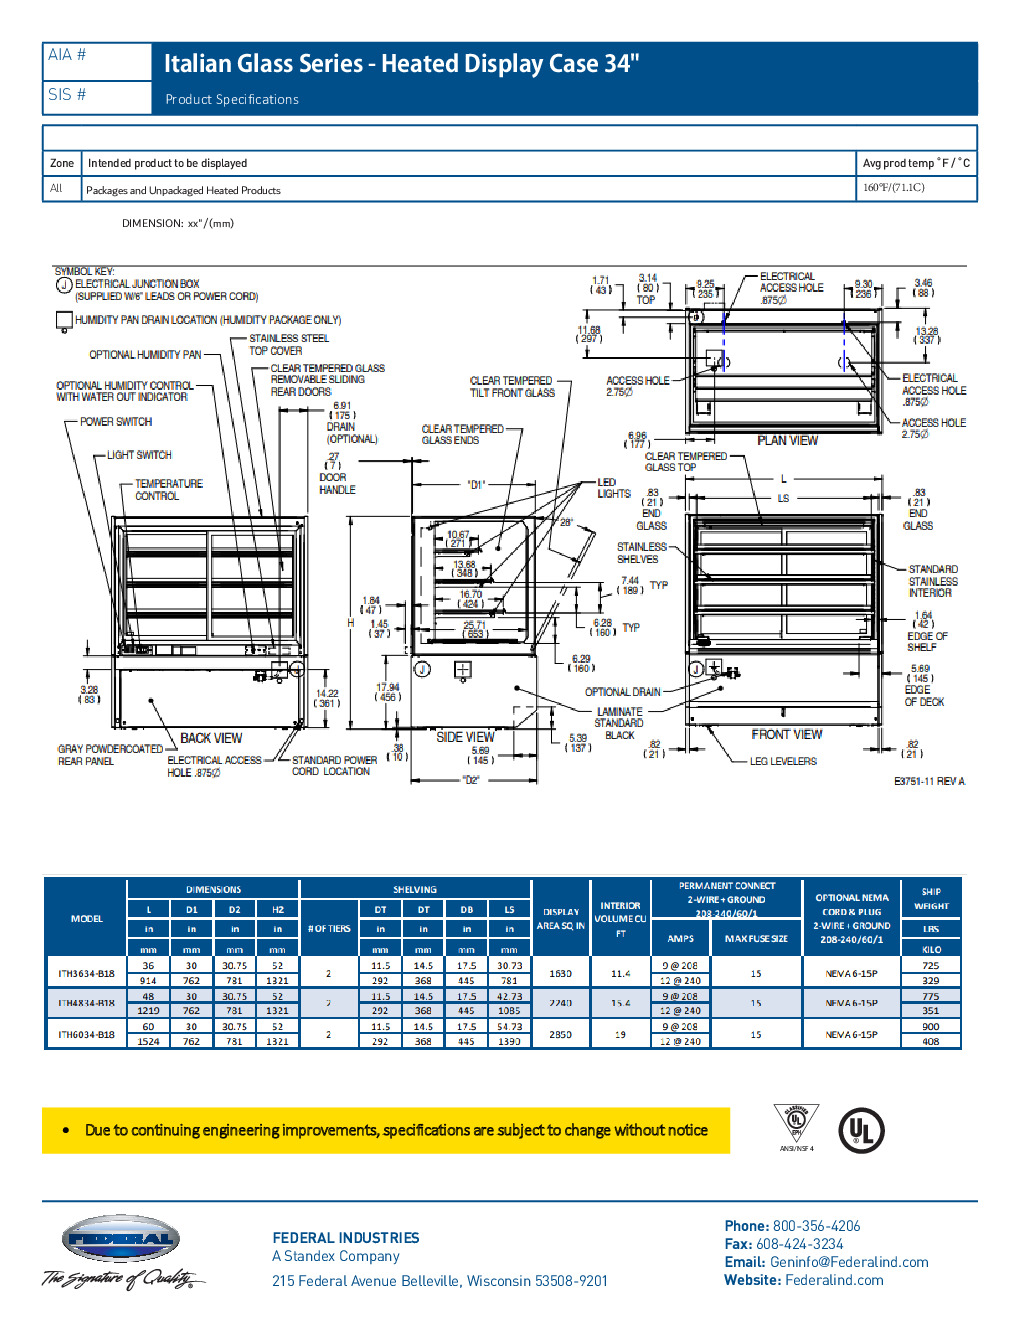 Federal Industries ITH4834-B18 Floor Model Heated Display Case